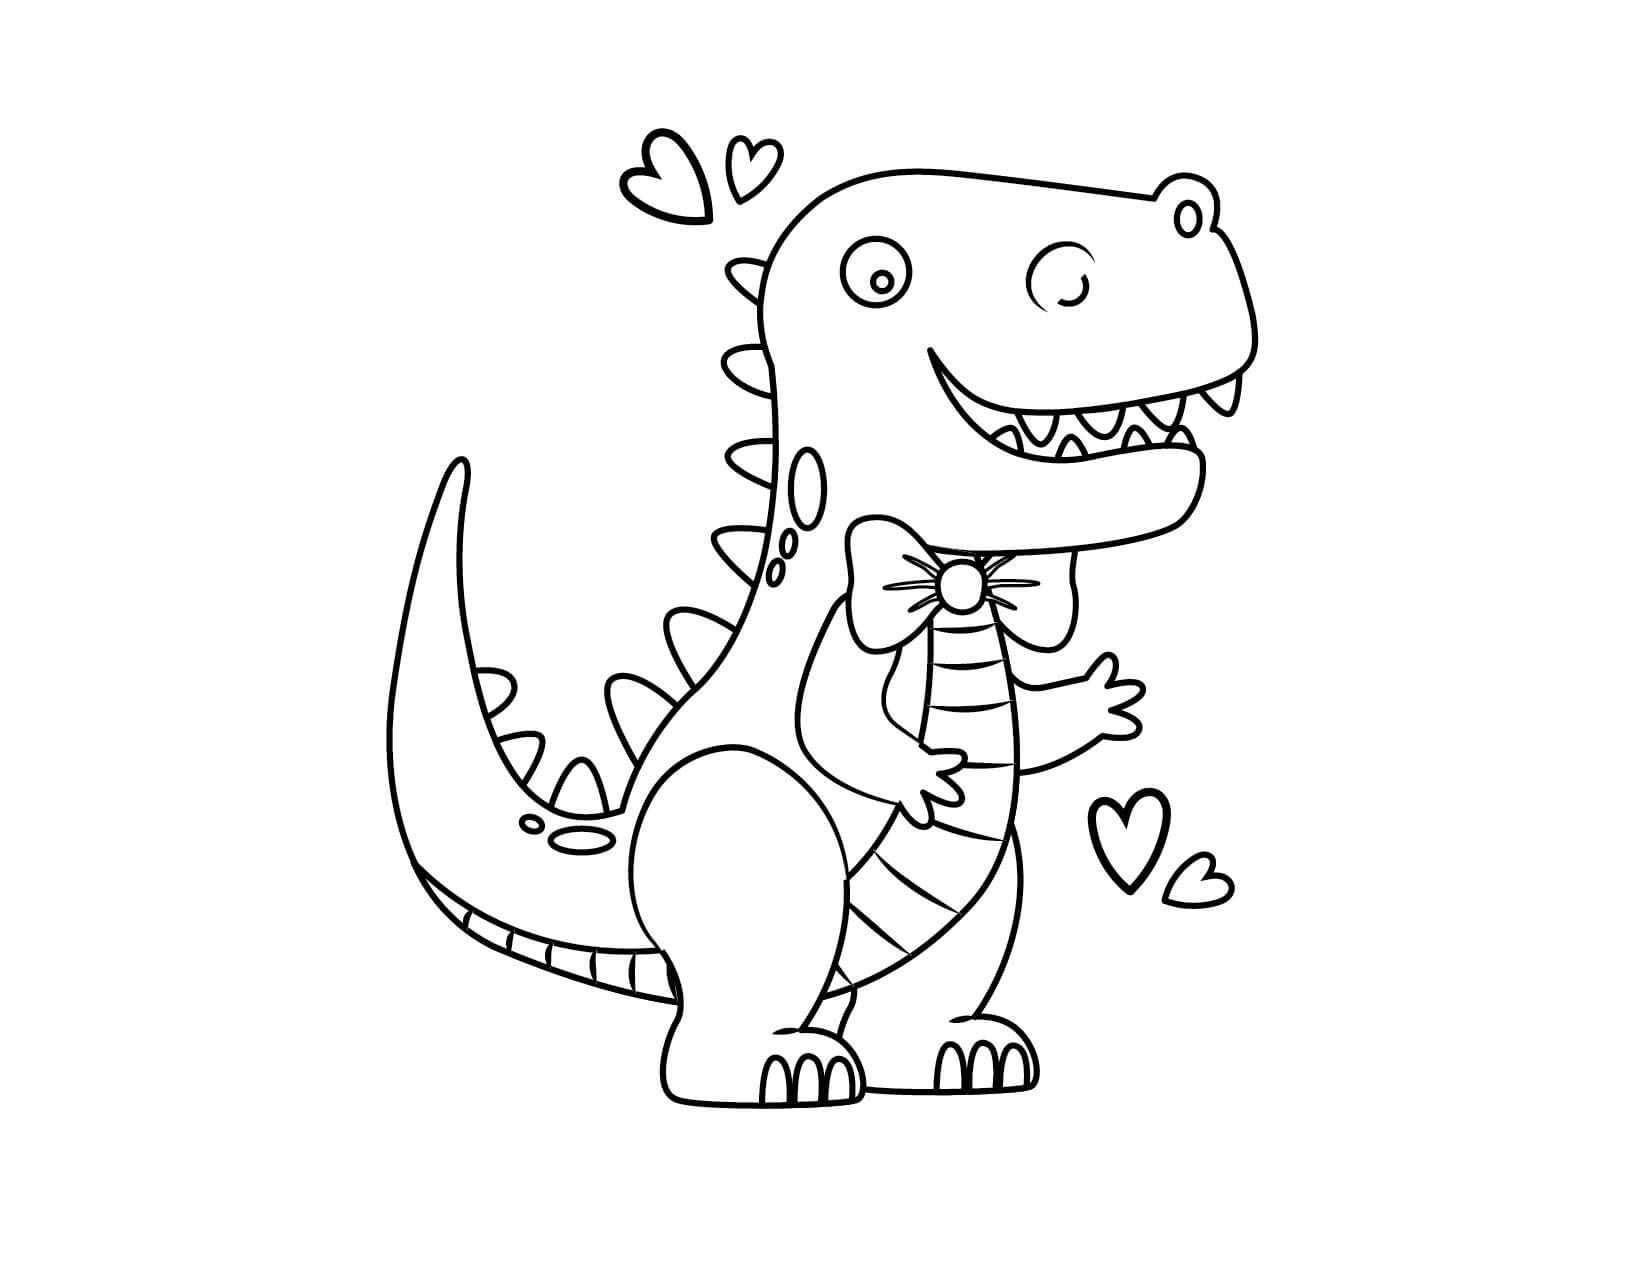 T-Rex in Love